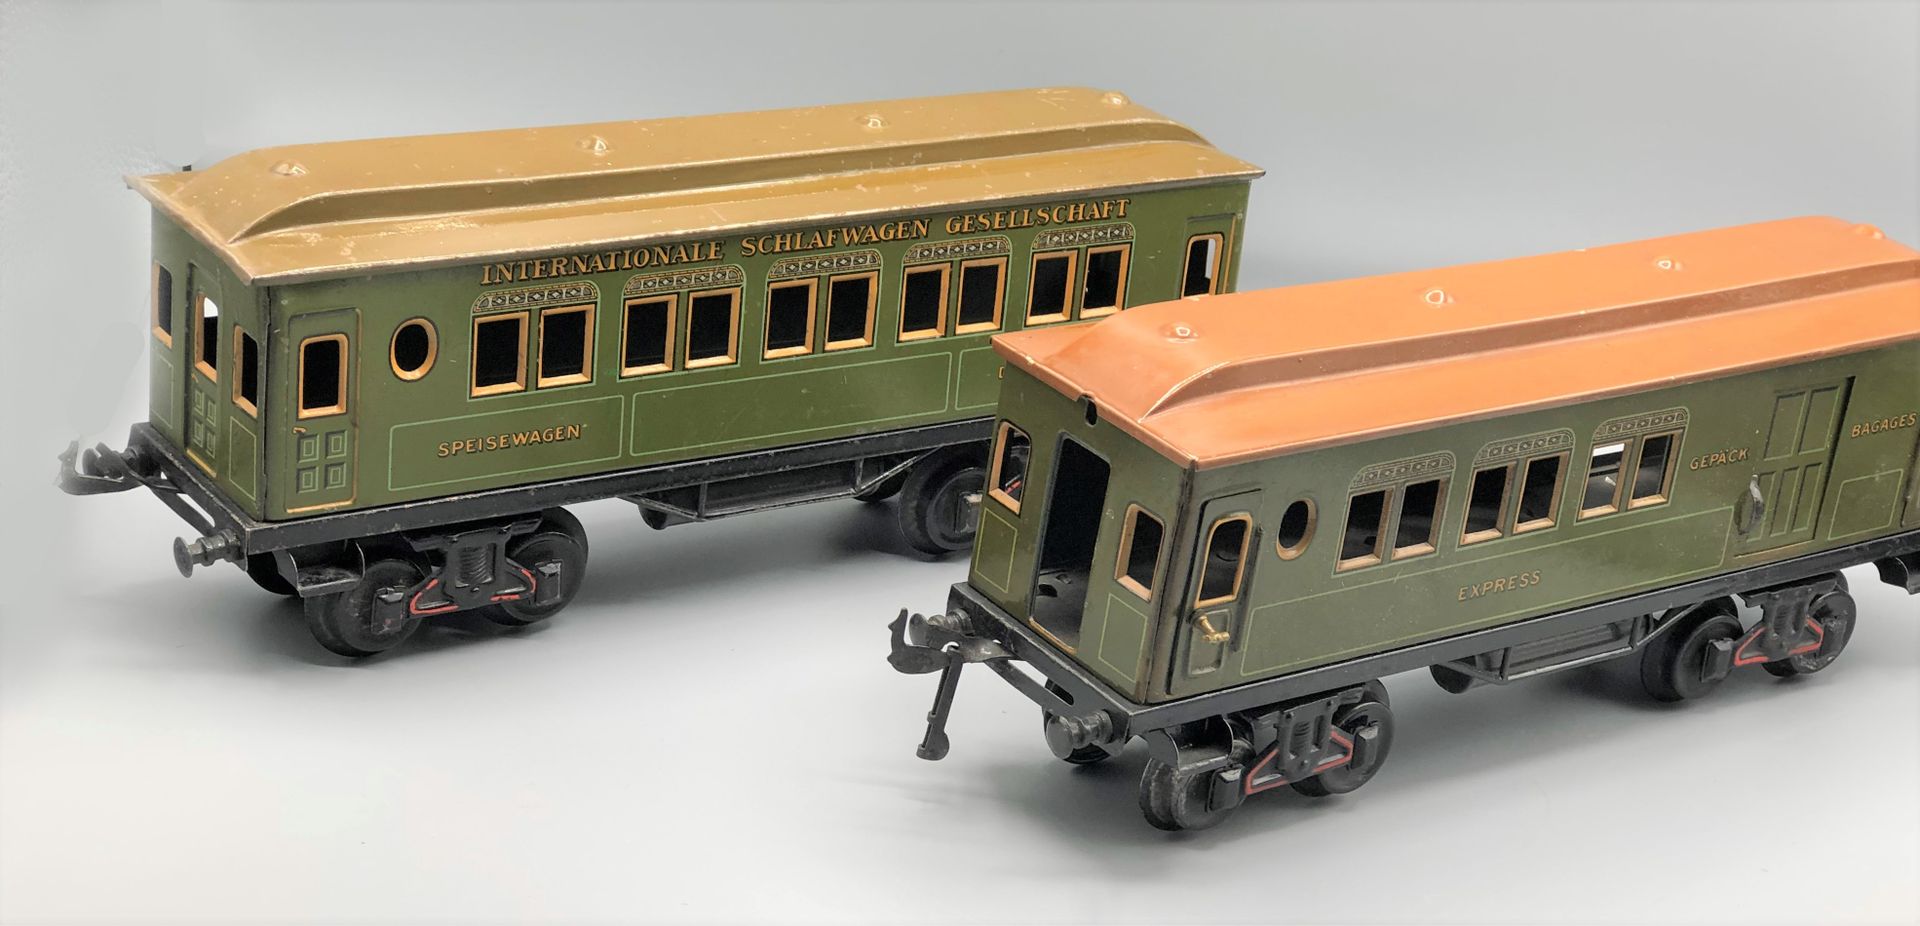 Null MARKLIN -0-

两辆CIWL和混合转向架餐车，绿色平版印刷的金属板和天窗

1920



使用状况

更多信息请联系该研究。